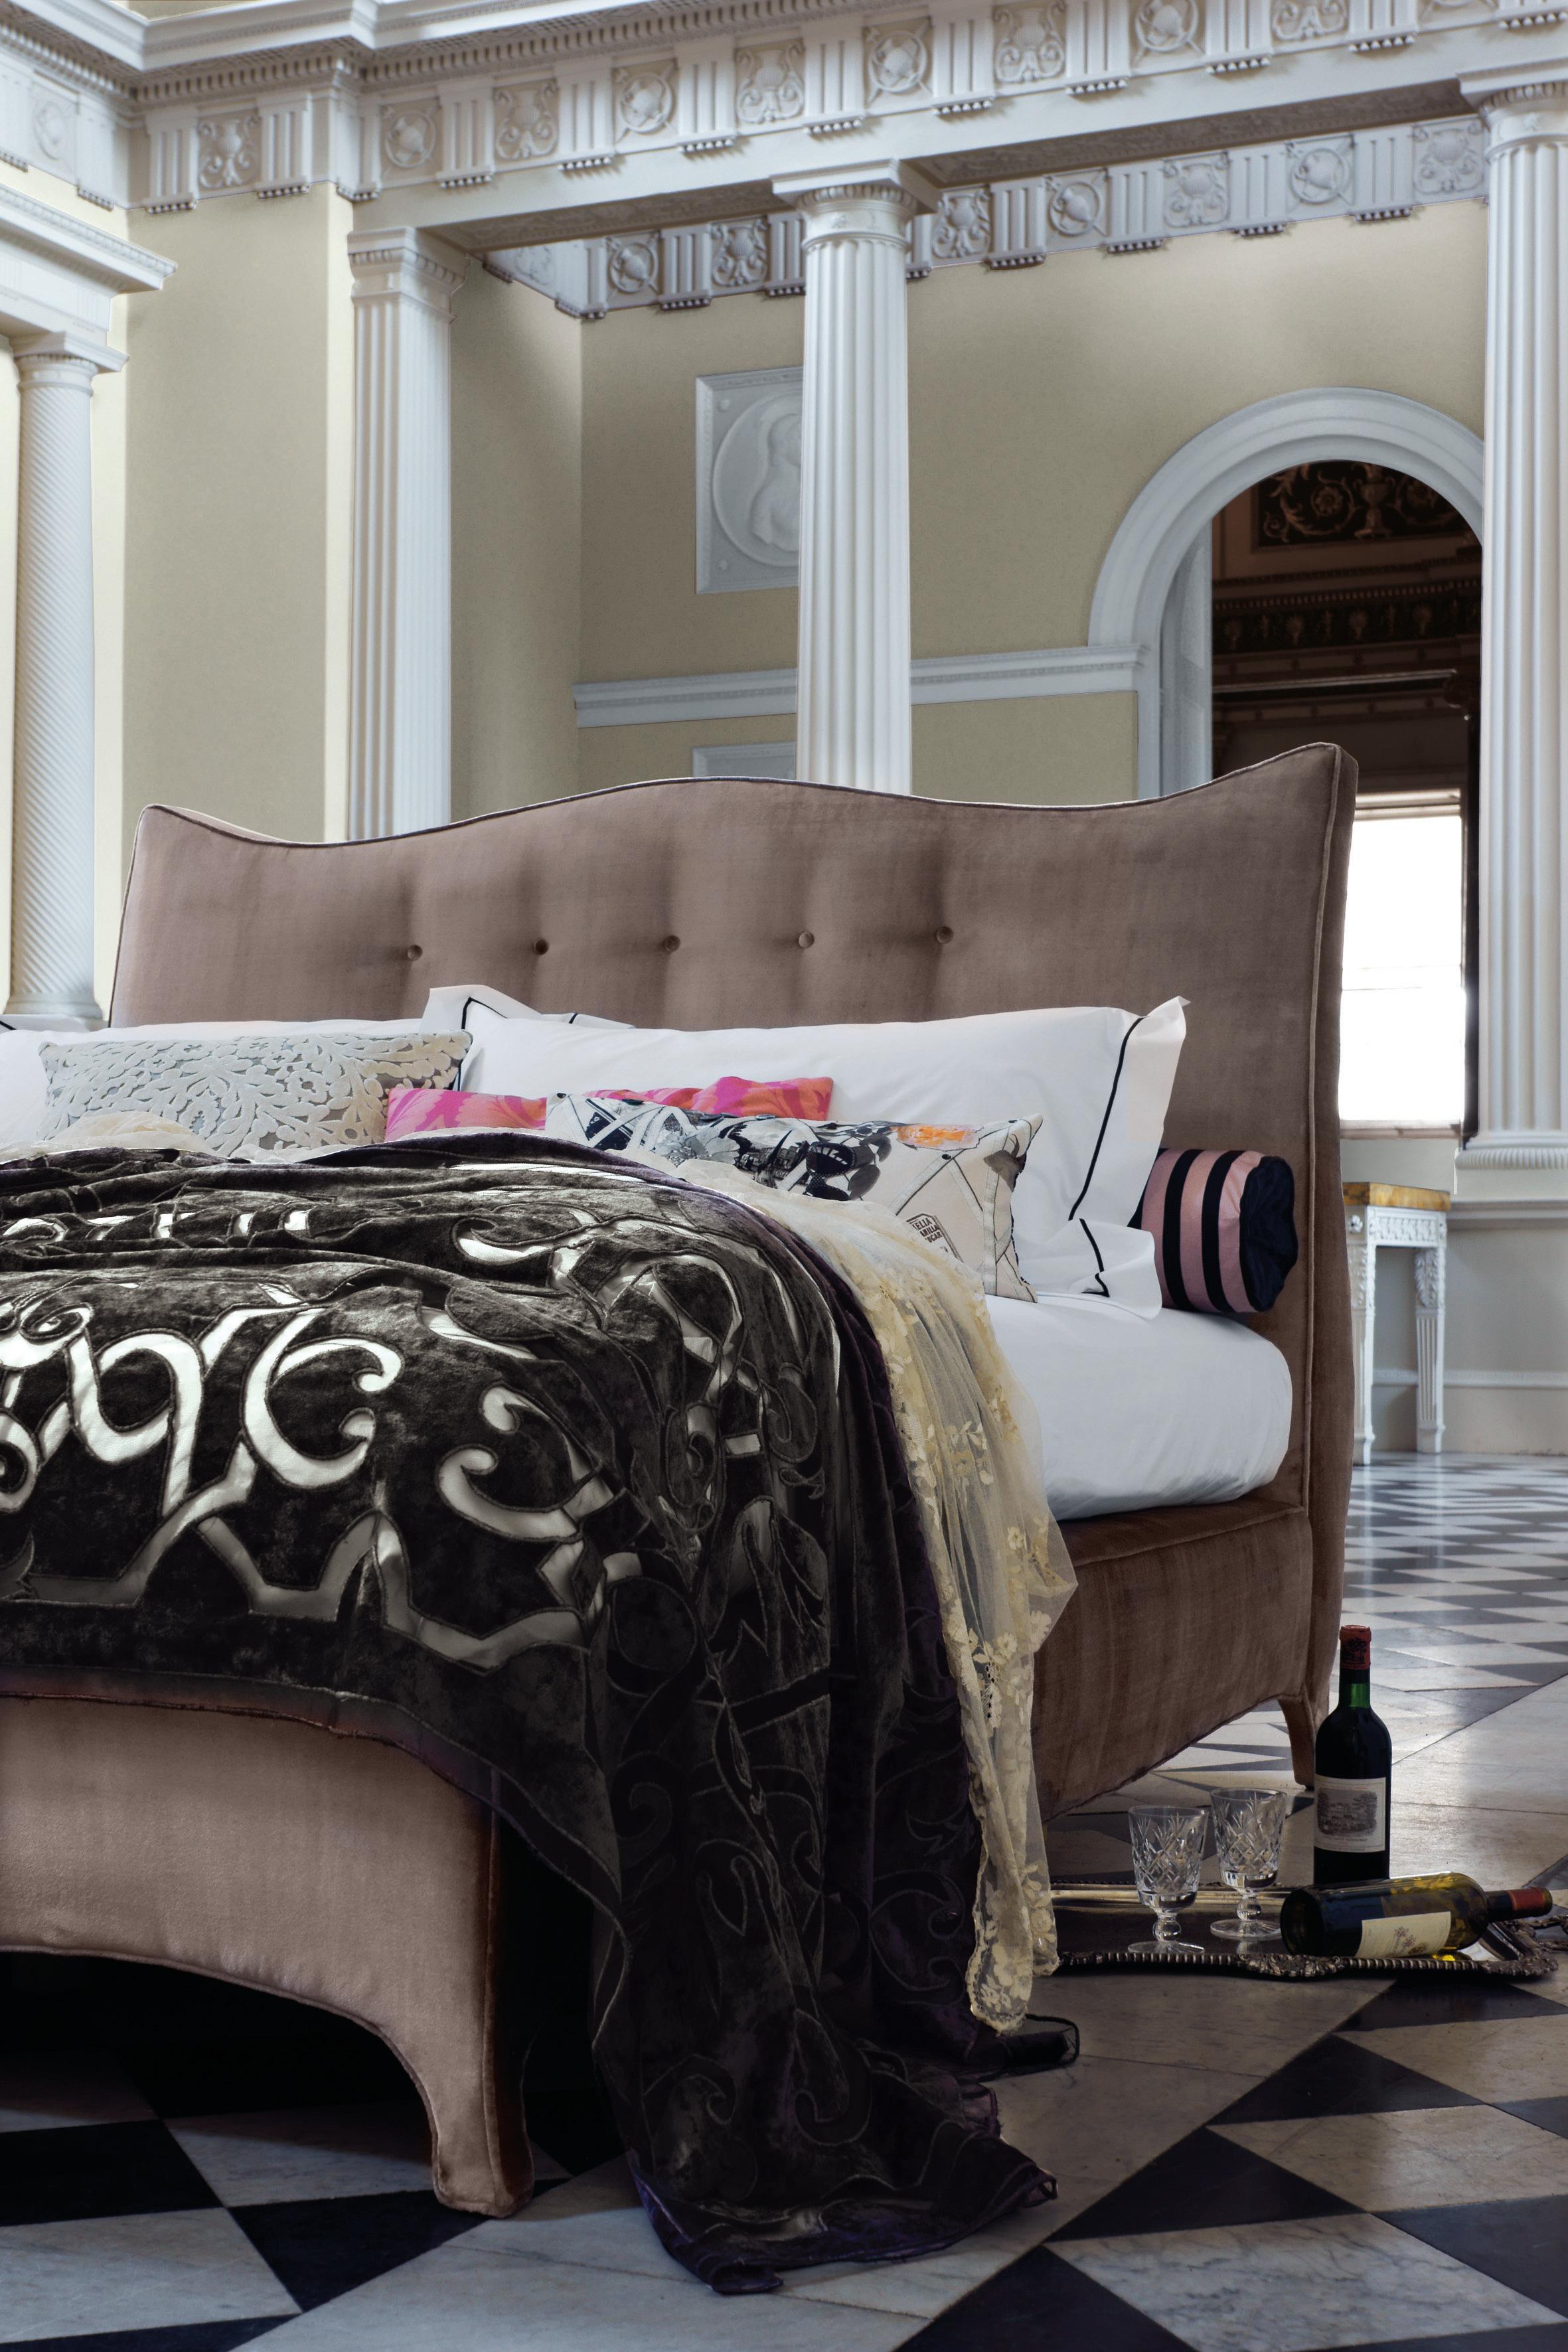 British Handcrafted Savoir Penelope & Nº2 Bed Set, Handmade in London, Eastern King Size For Sale